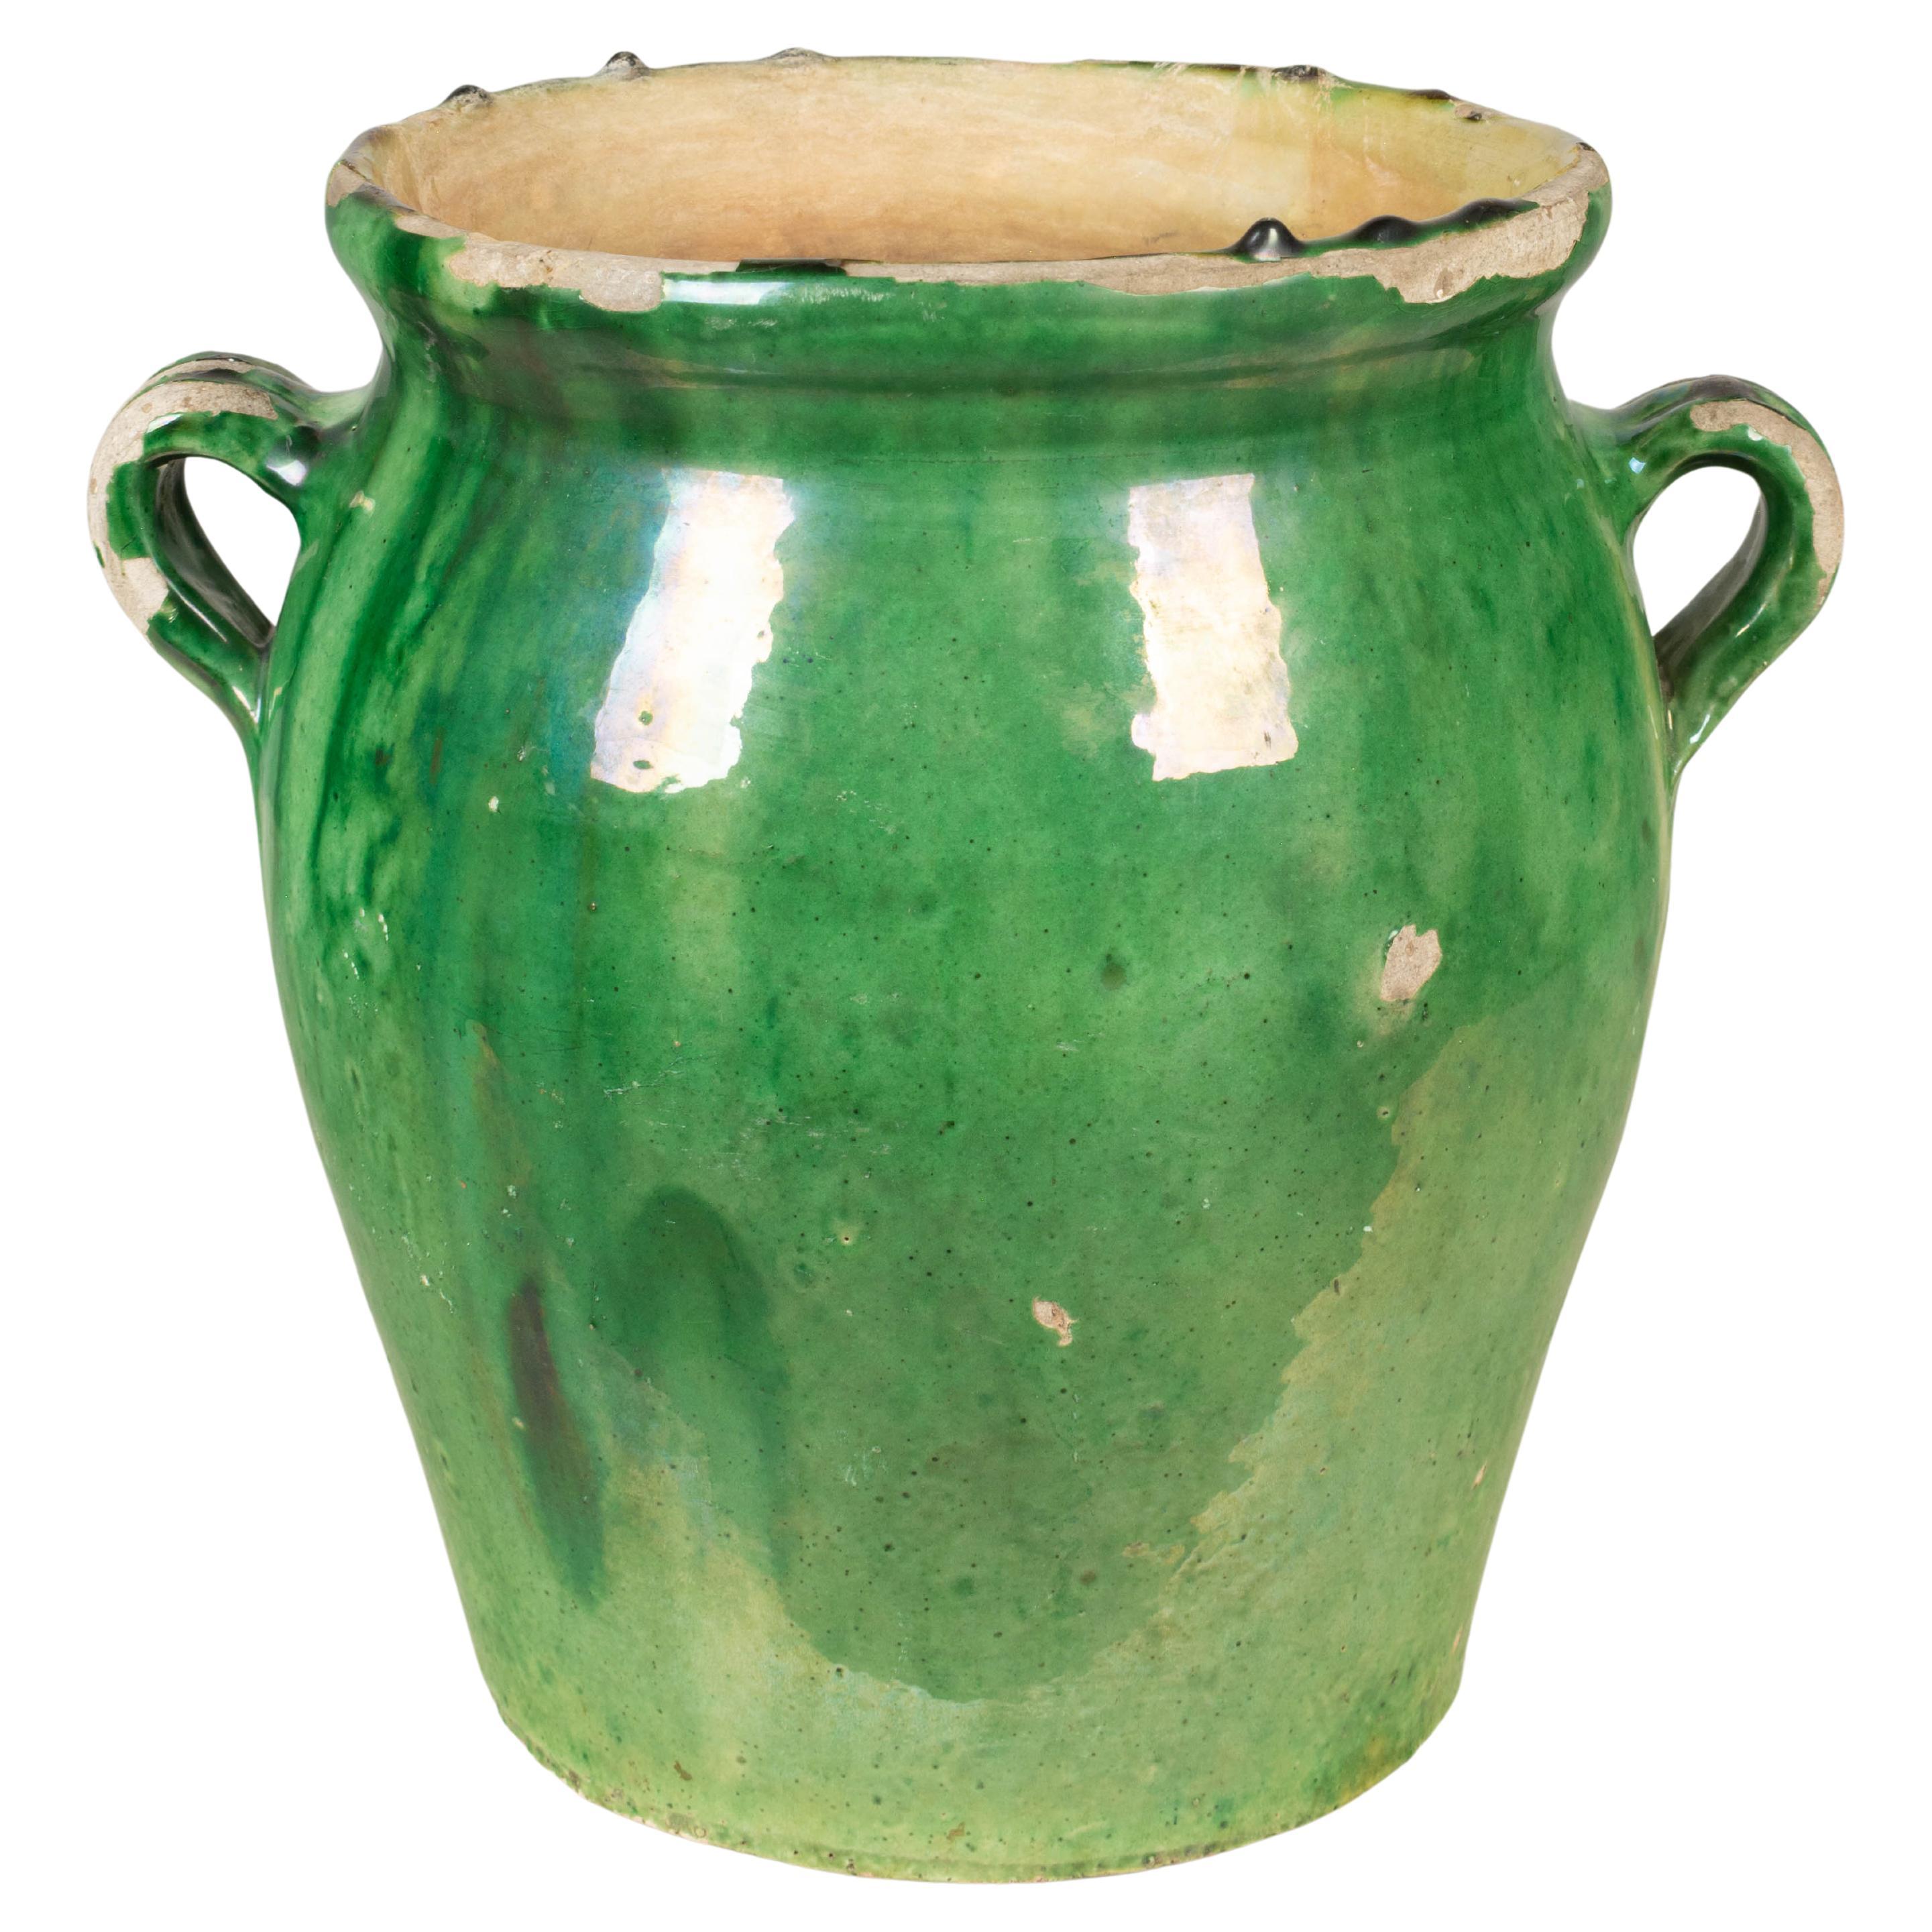 Grün glasierte Terrakotta-Keramik-Vase oder Übertopf